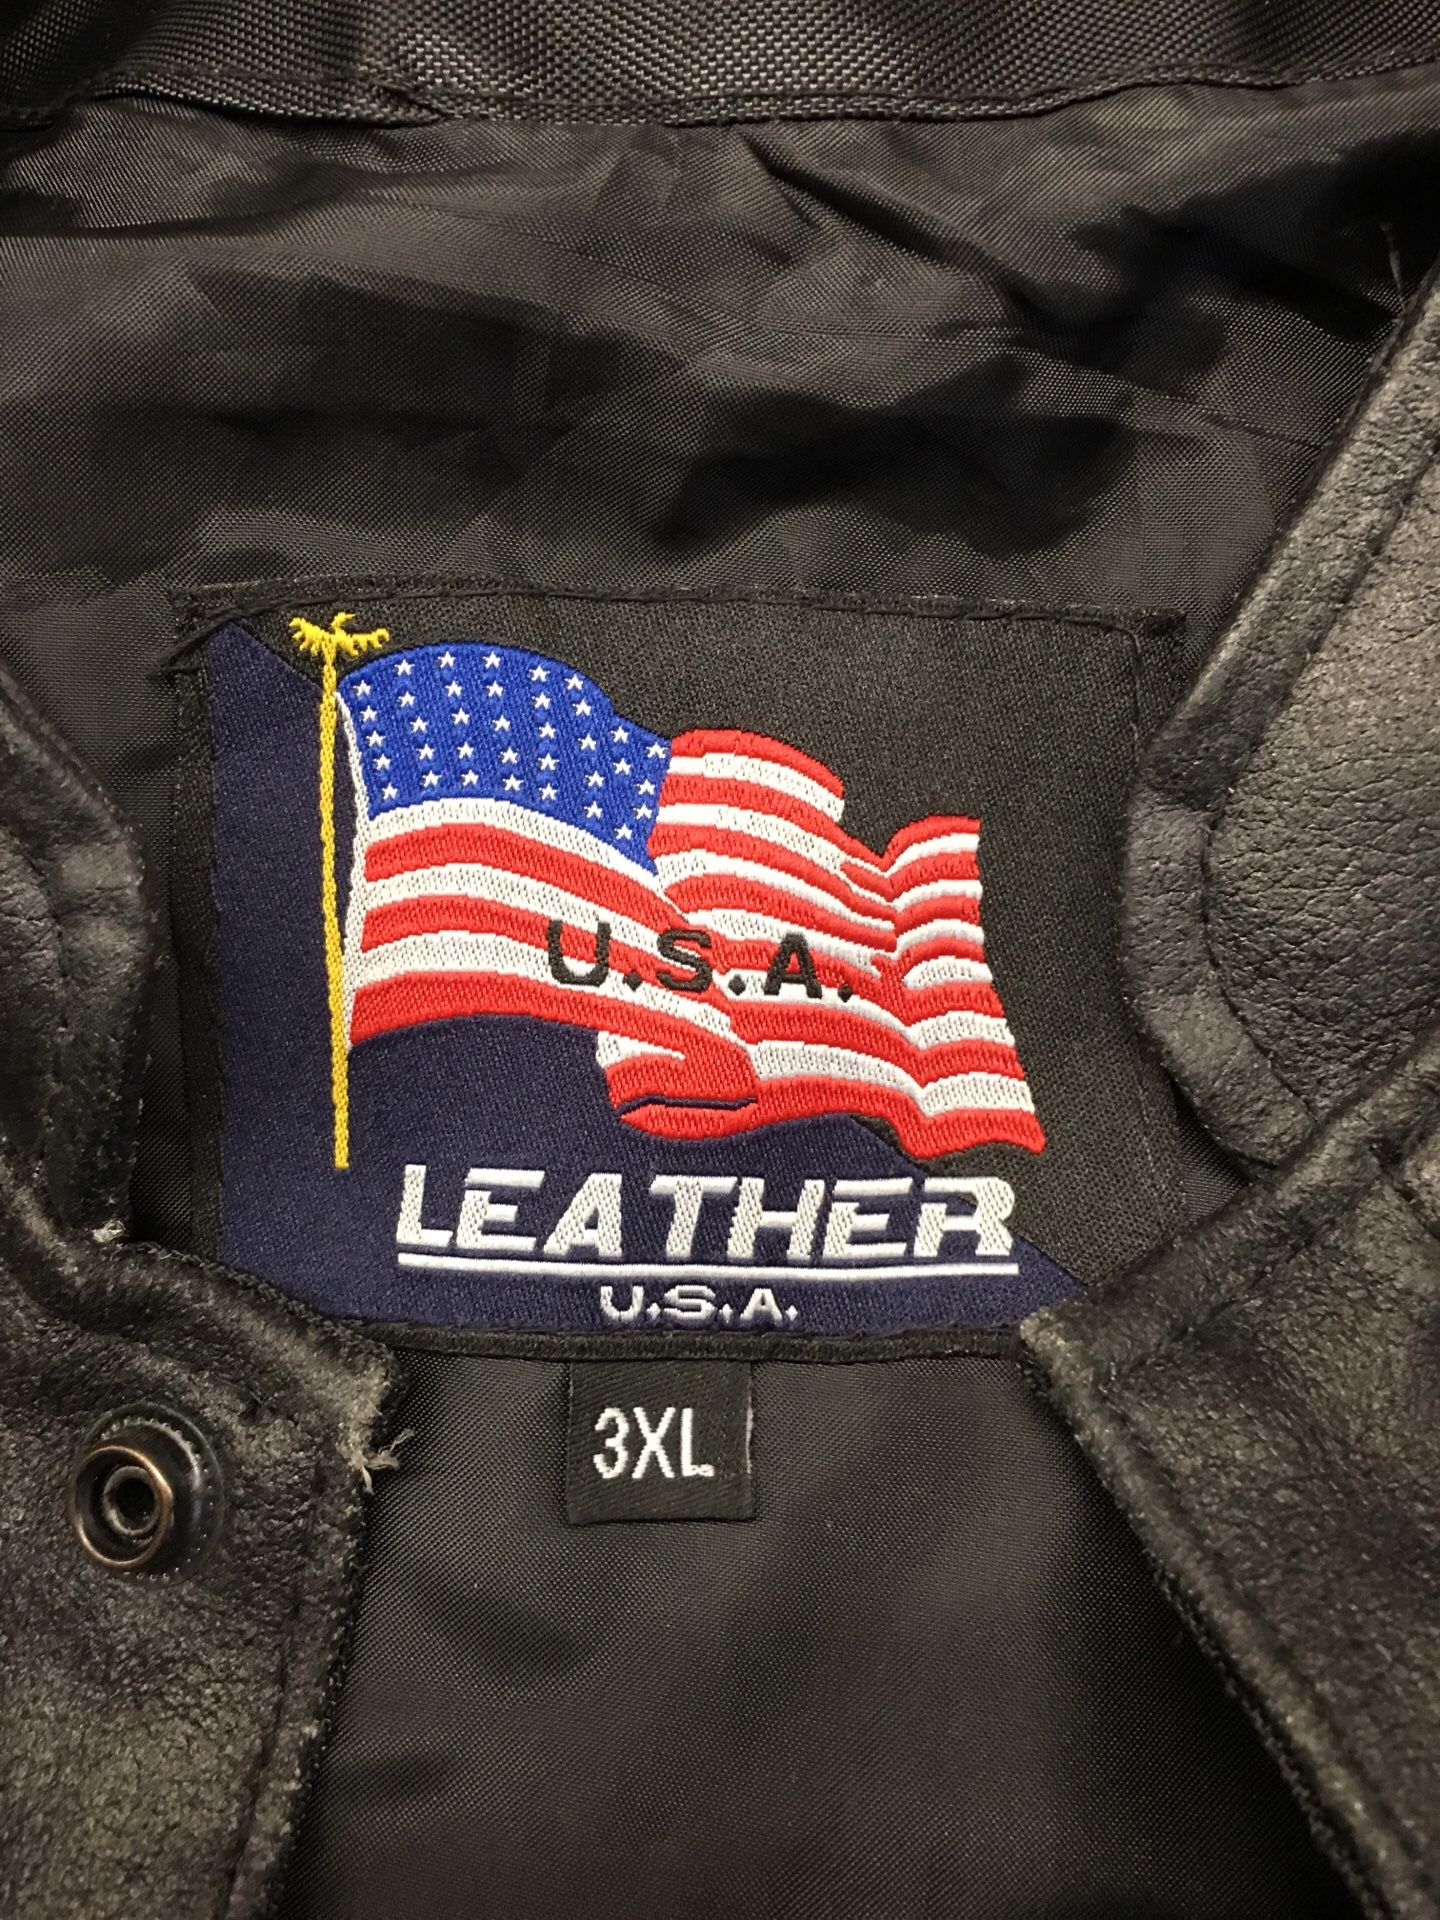 USA leather vest